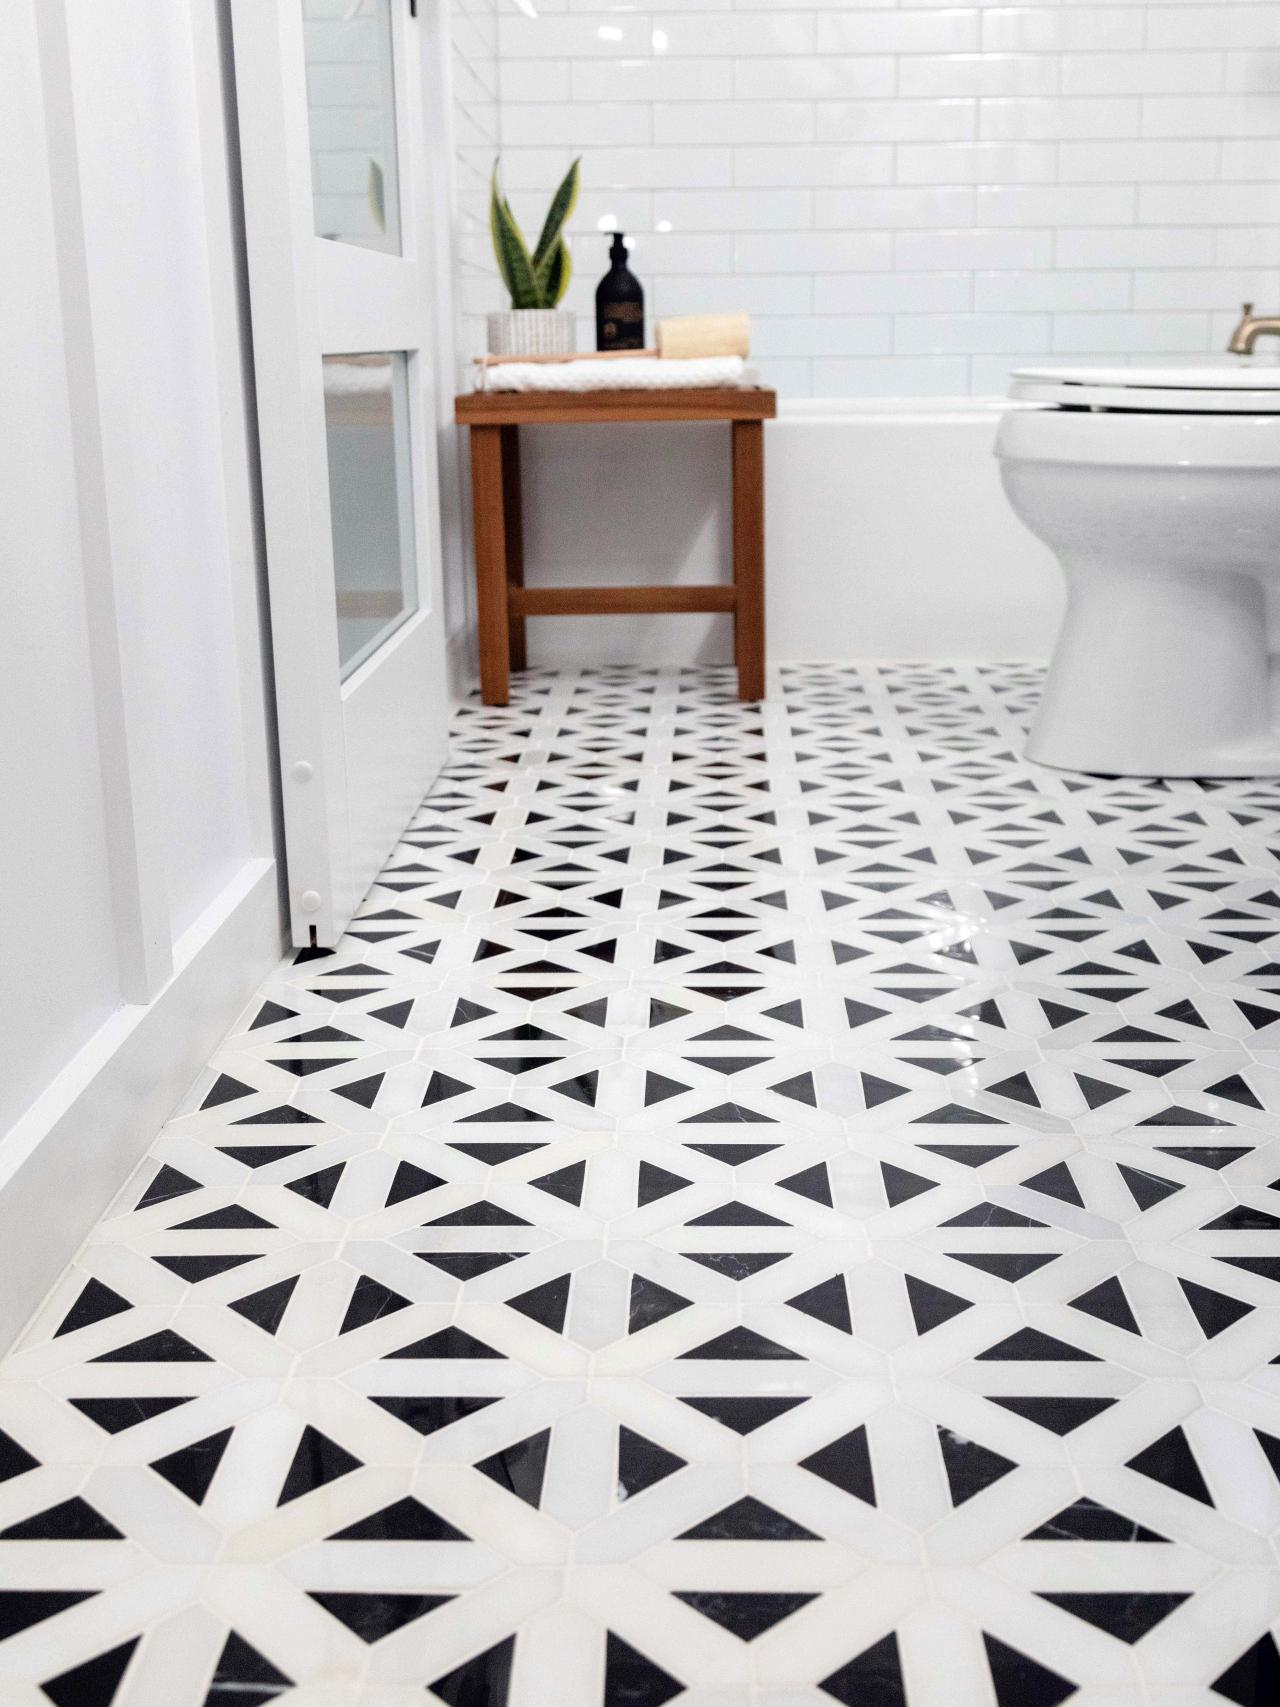 How To Lay A Tile Floor, Install Shower Tile Floor